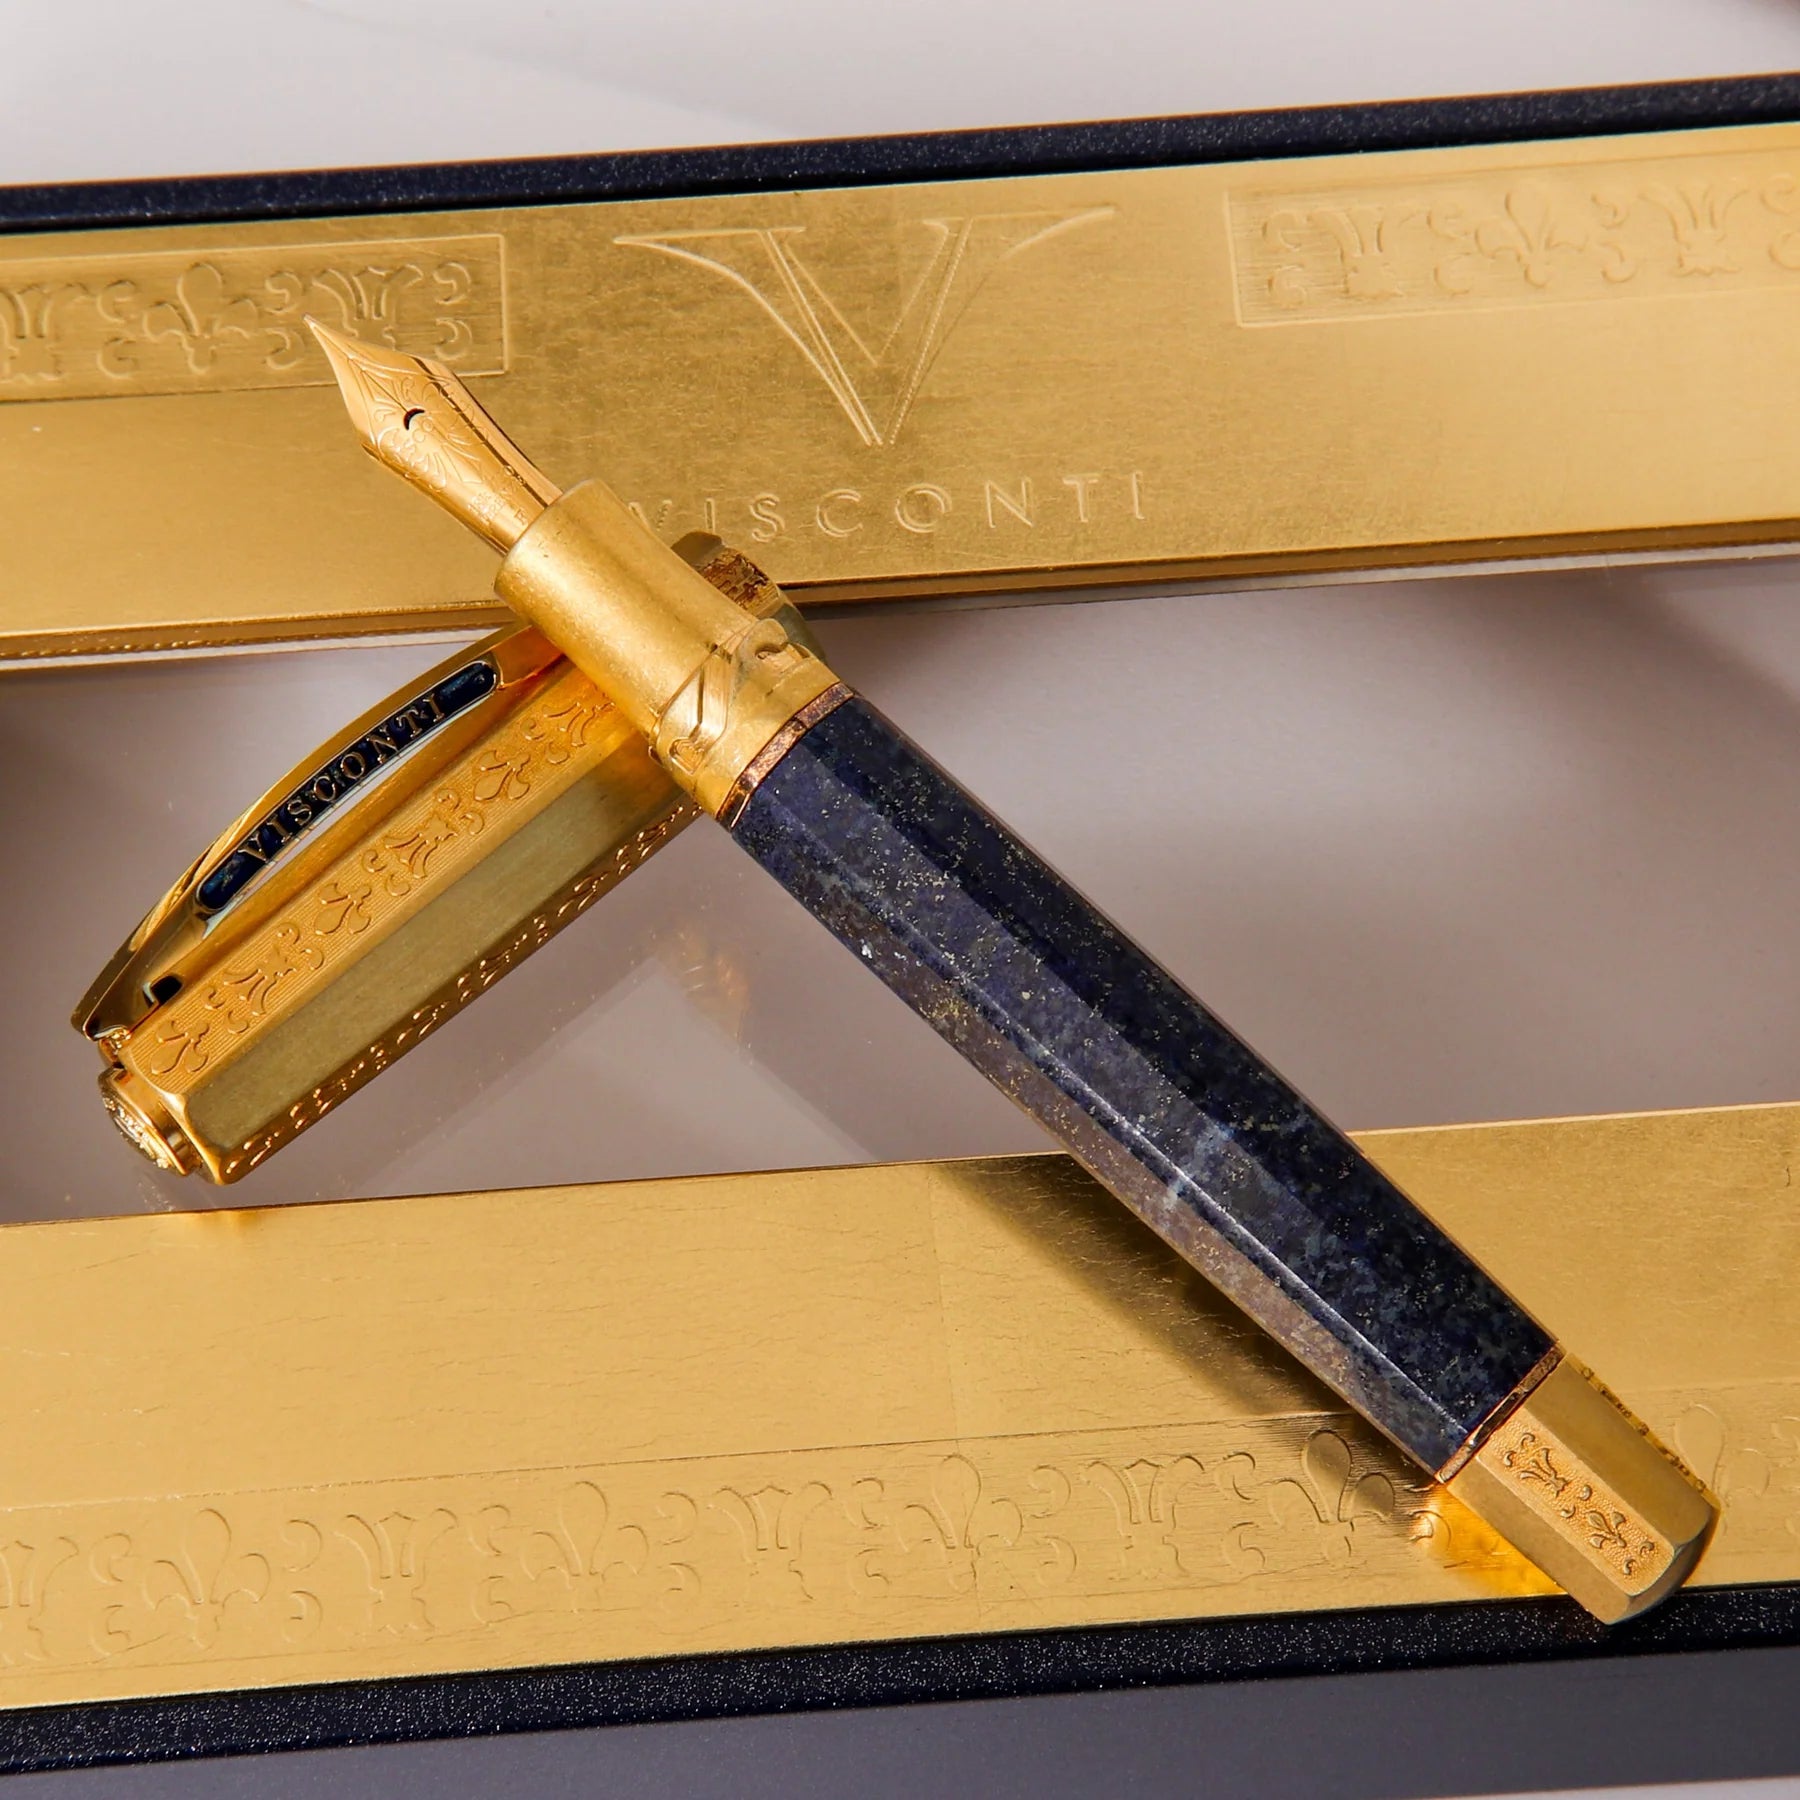 Luxury Wood Ballpoint Pens with Gift Box Elegant Fancy Nice Pens